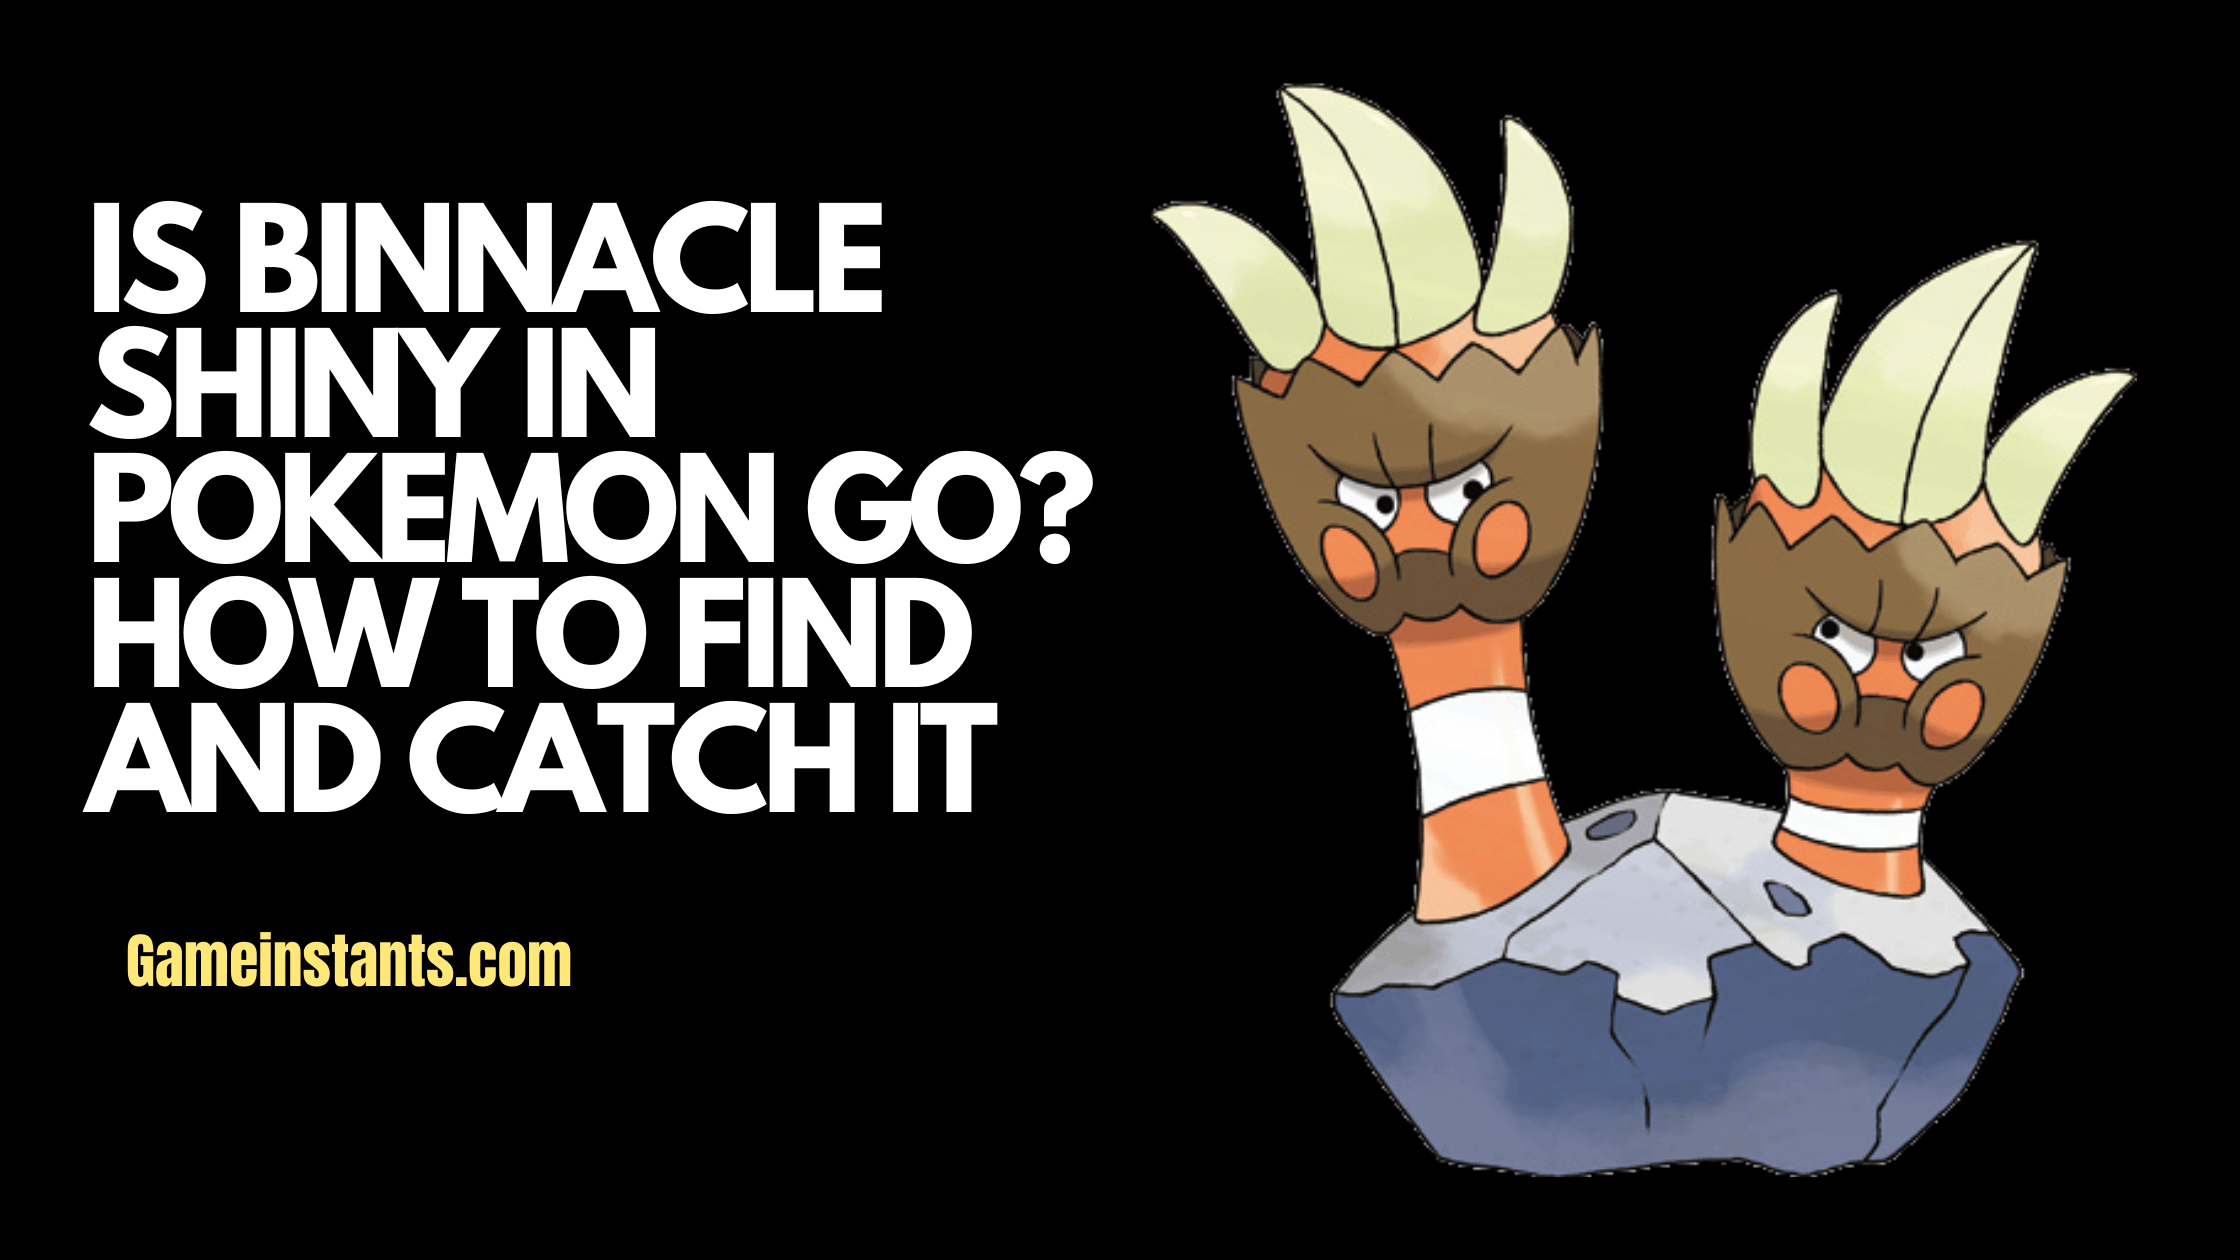 Shiny Binnacle Pokemon Go